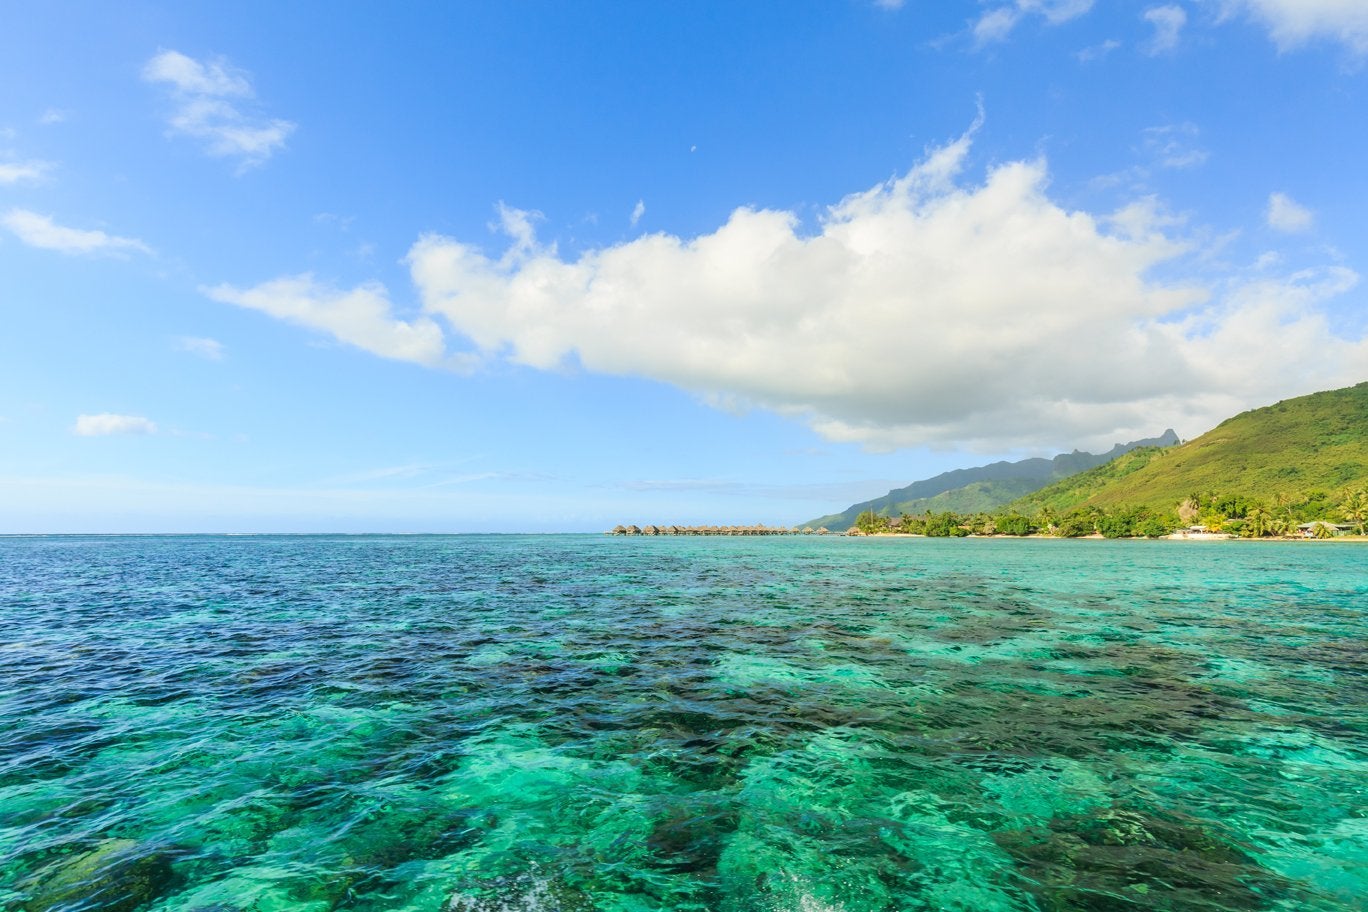 Tahiti blue water off the coast